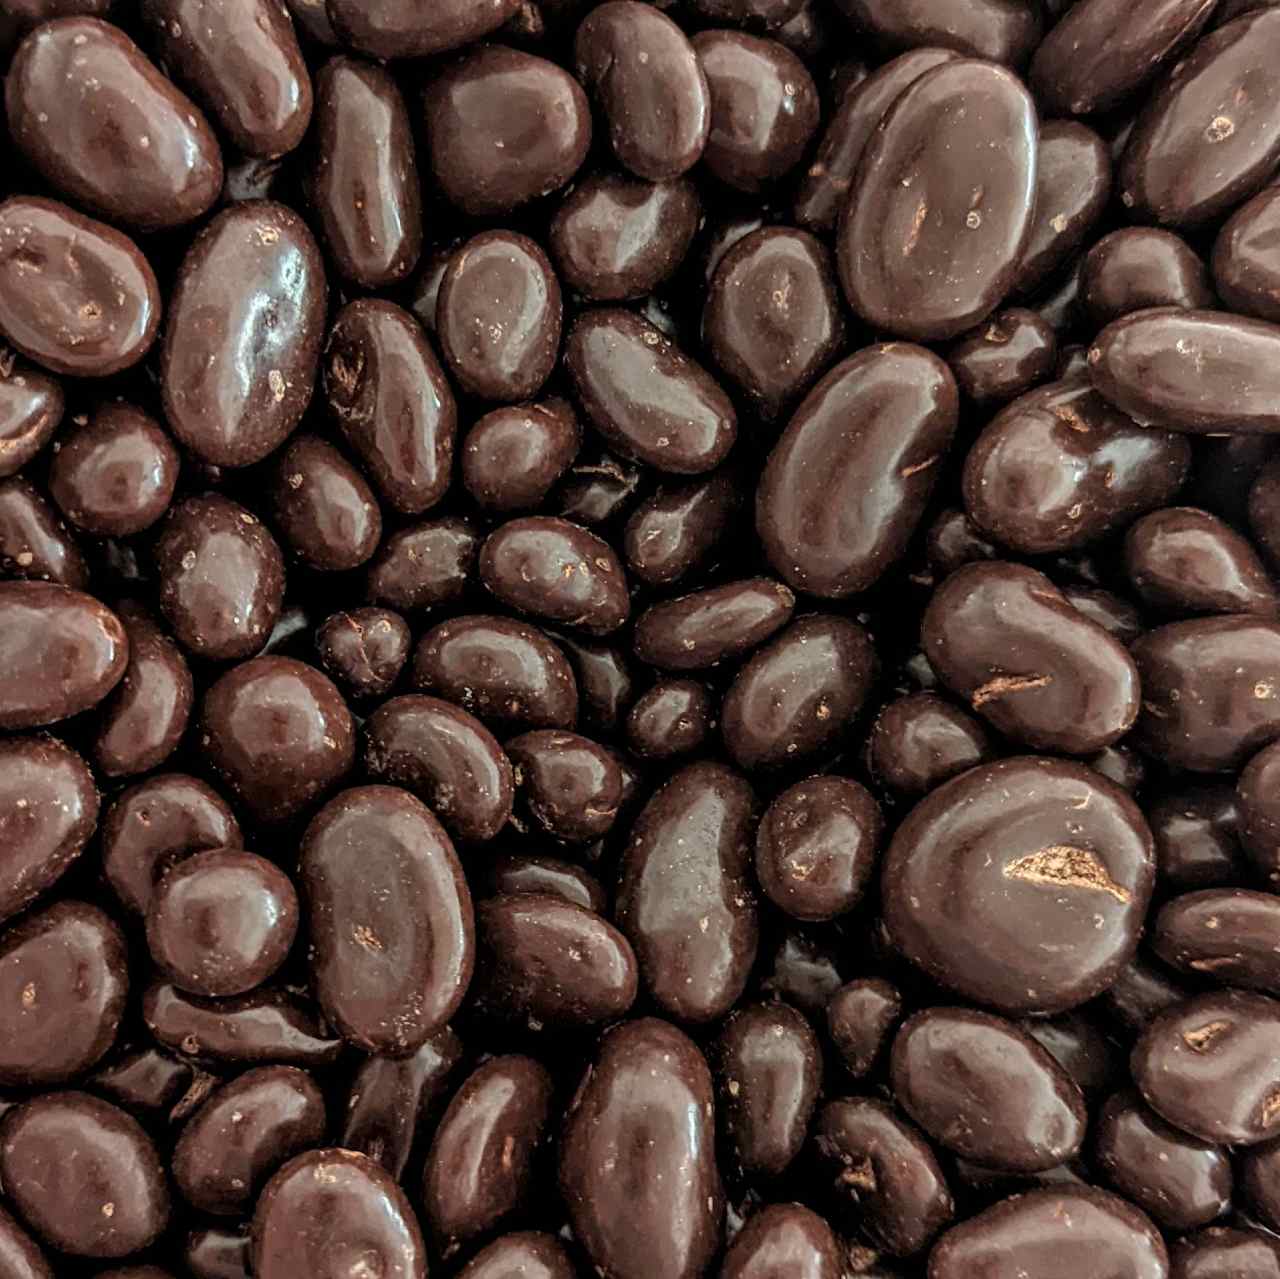 Vegan chocolate raisins